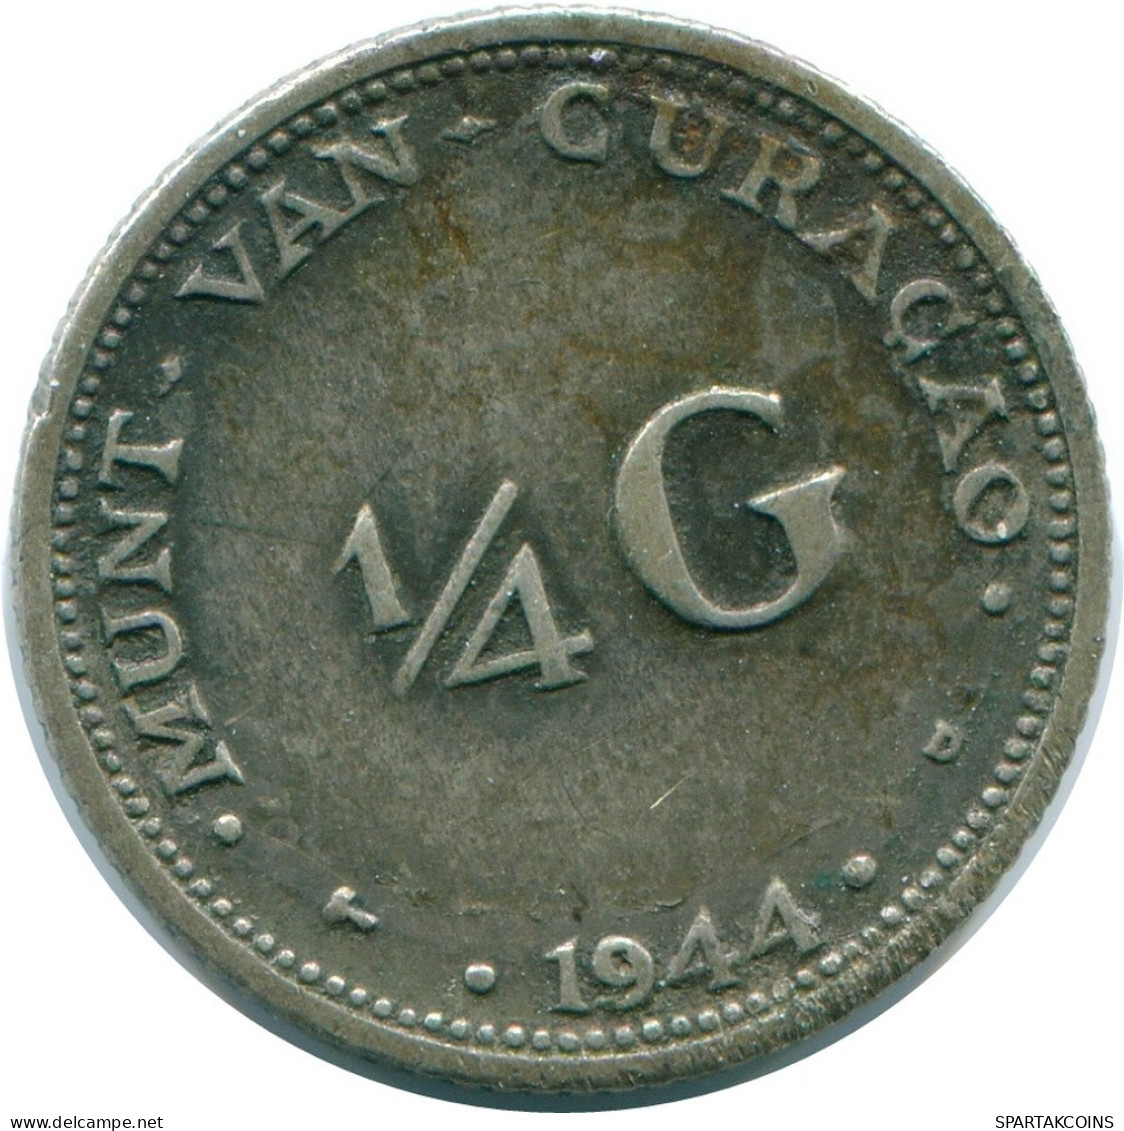 1/4 GULDEN 1944 CURACAO Netherlands SILVER Colonial Coin #NL10590.4.U.A - Curacao